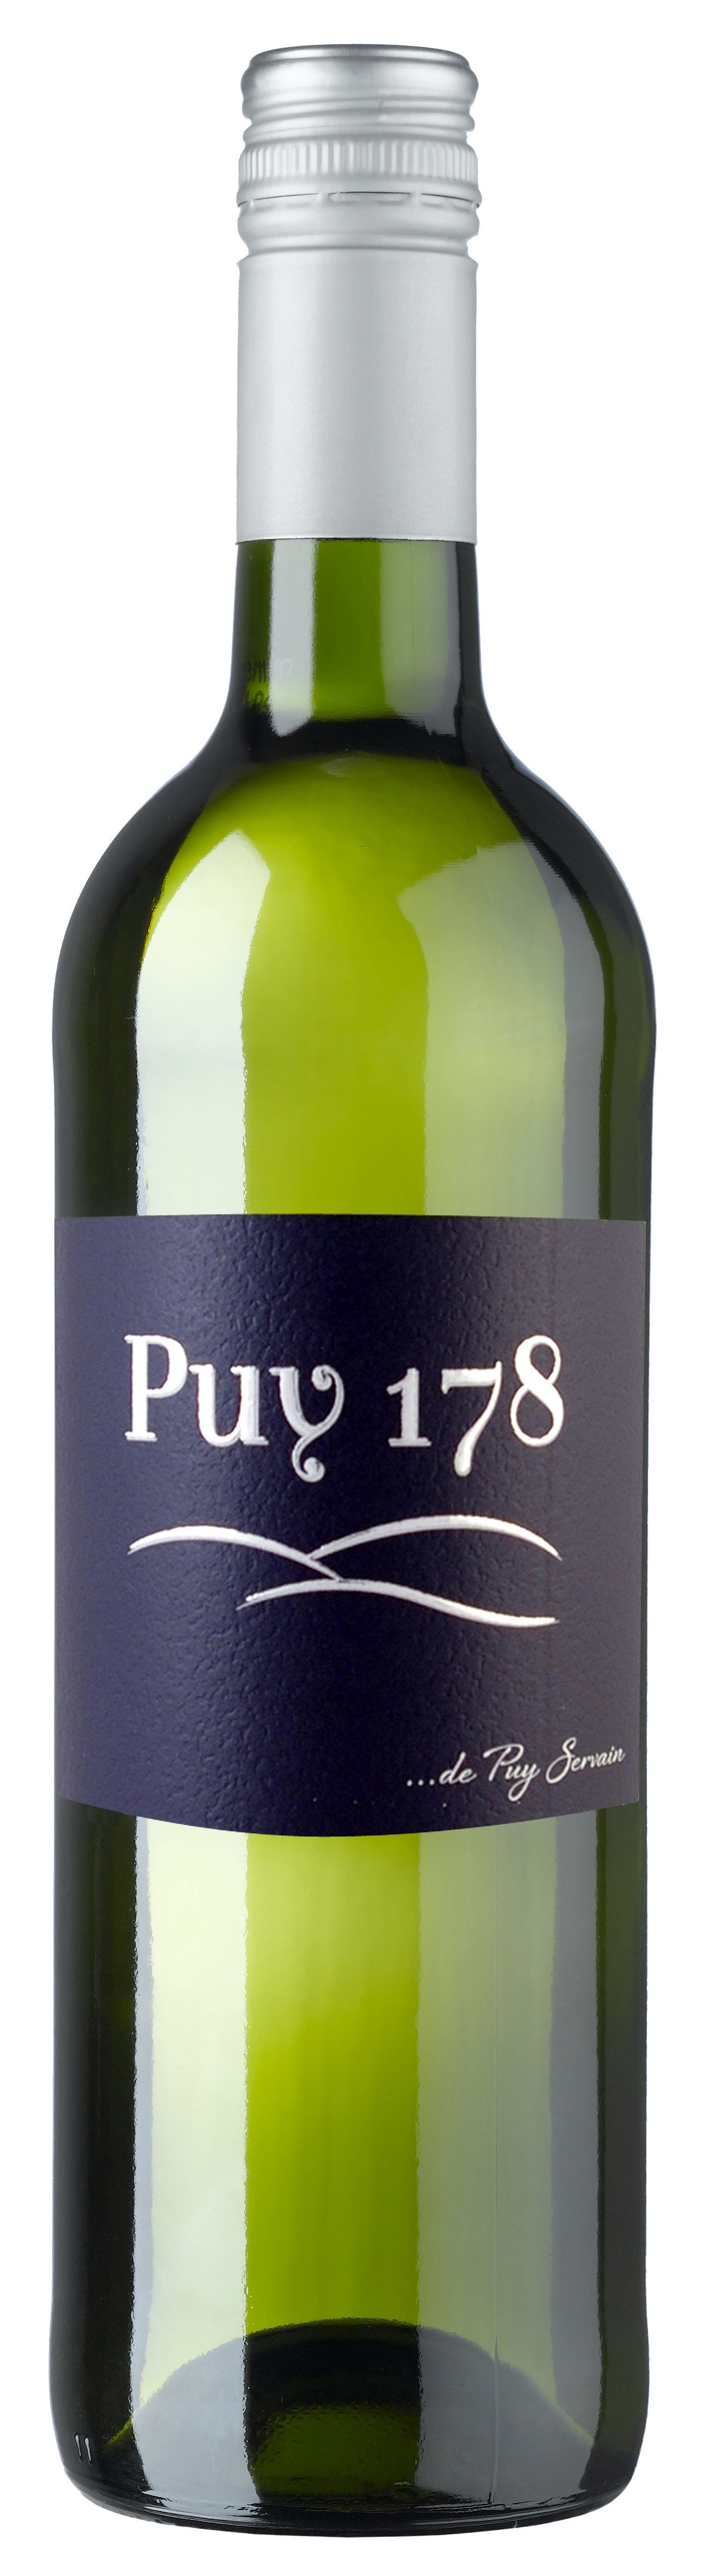 Puy 178 de Puy Servain 2023 weiß                            